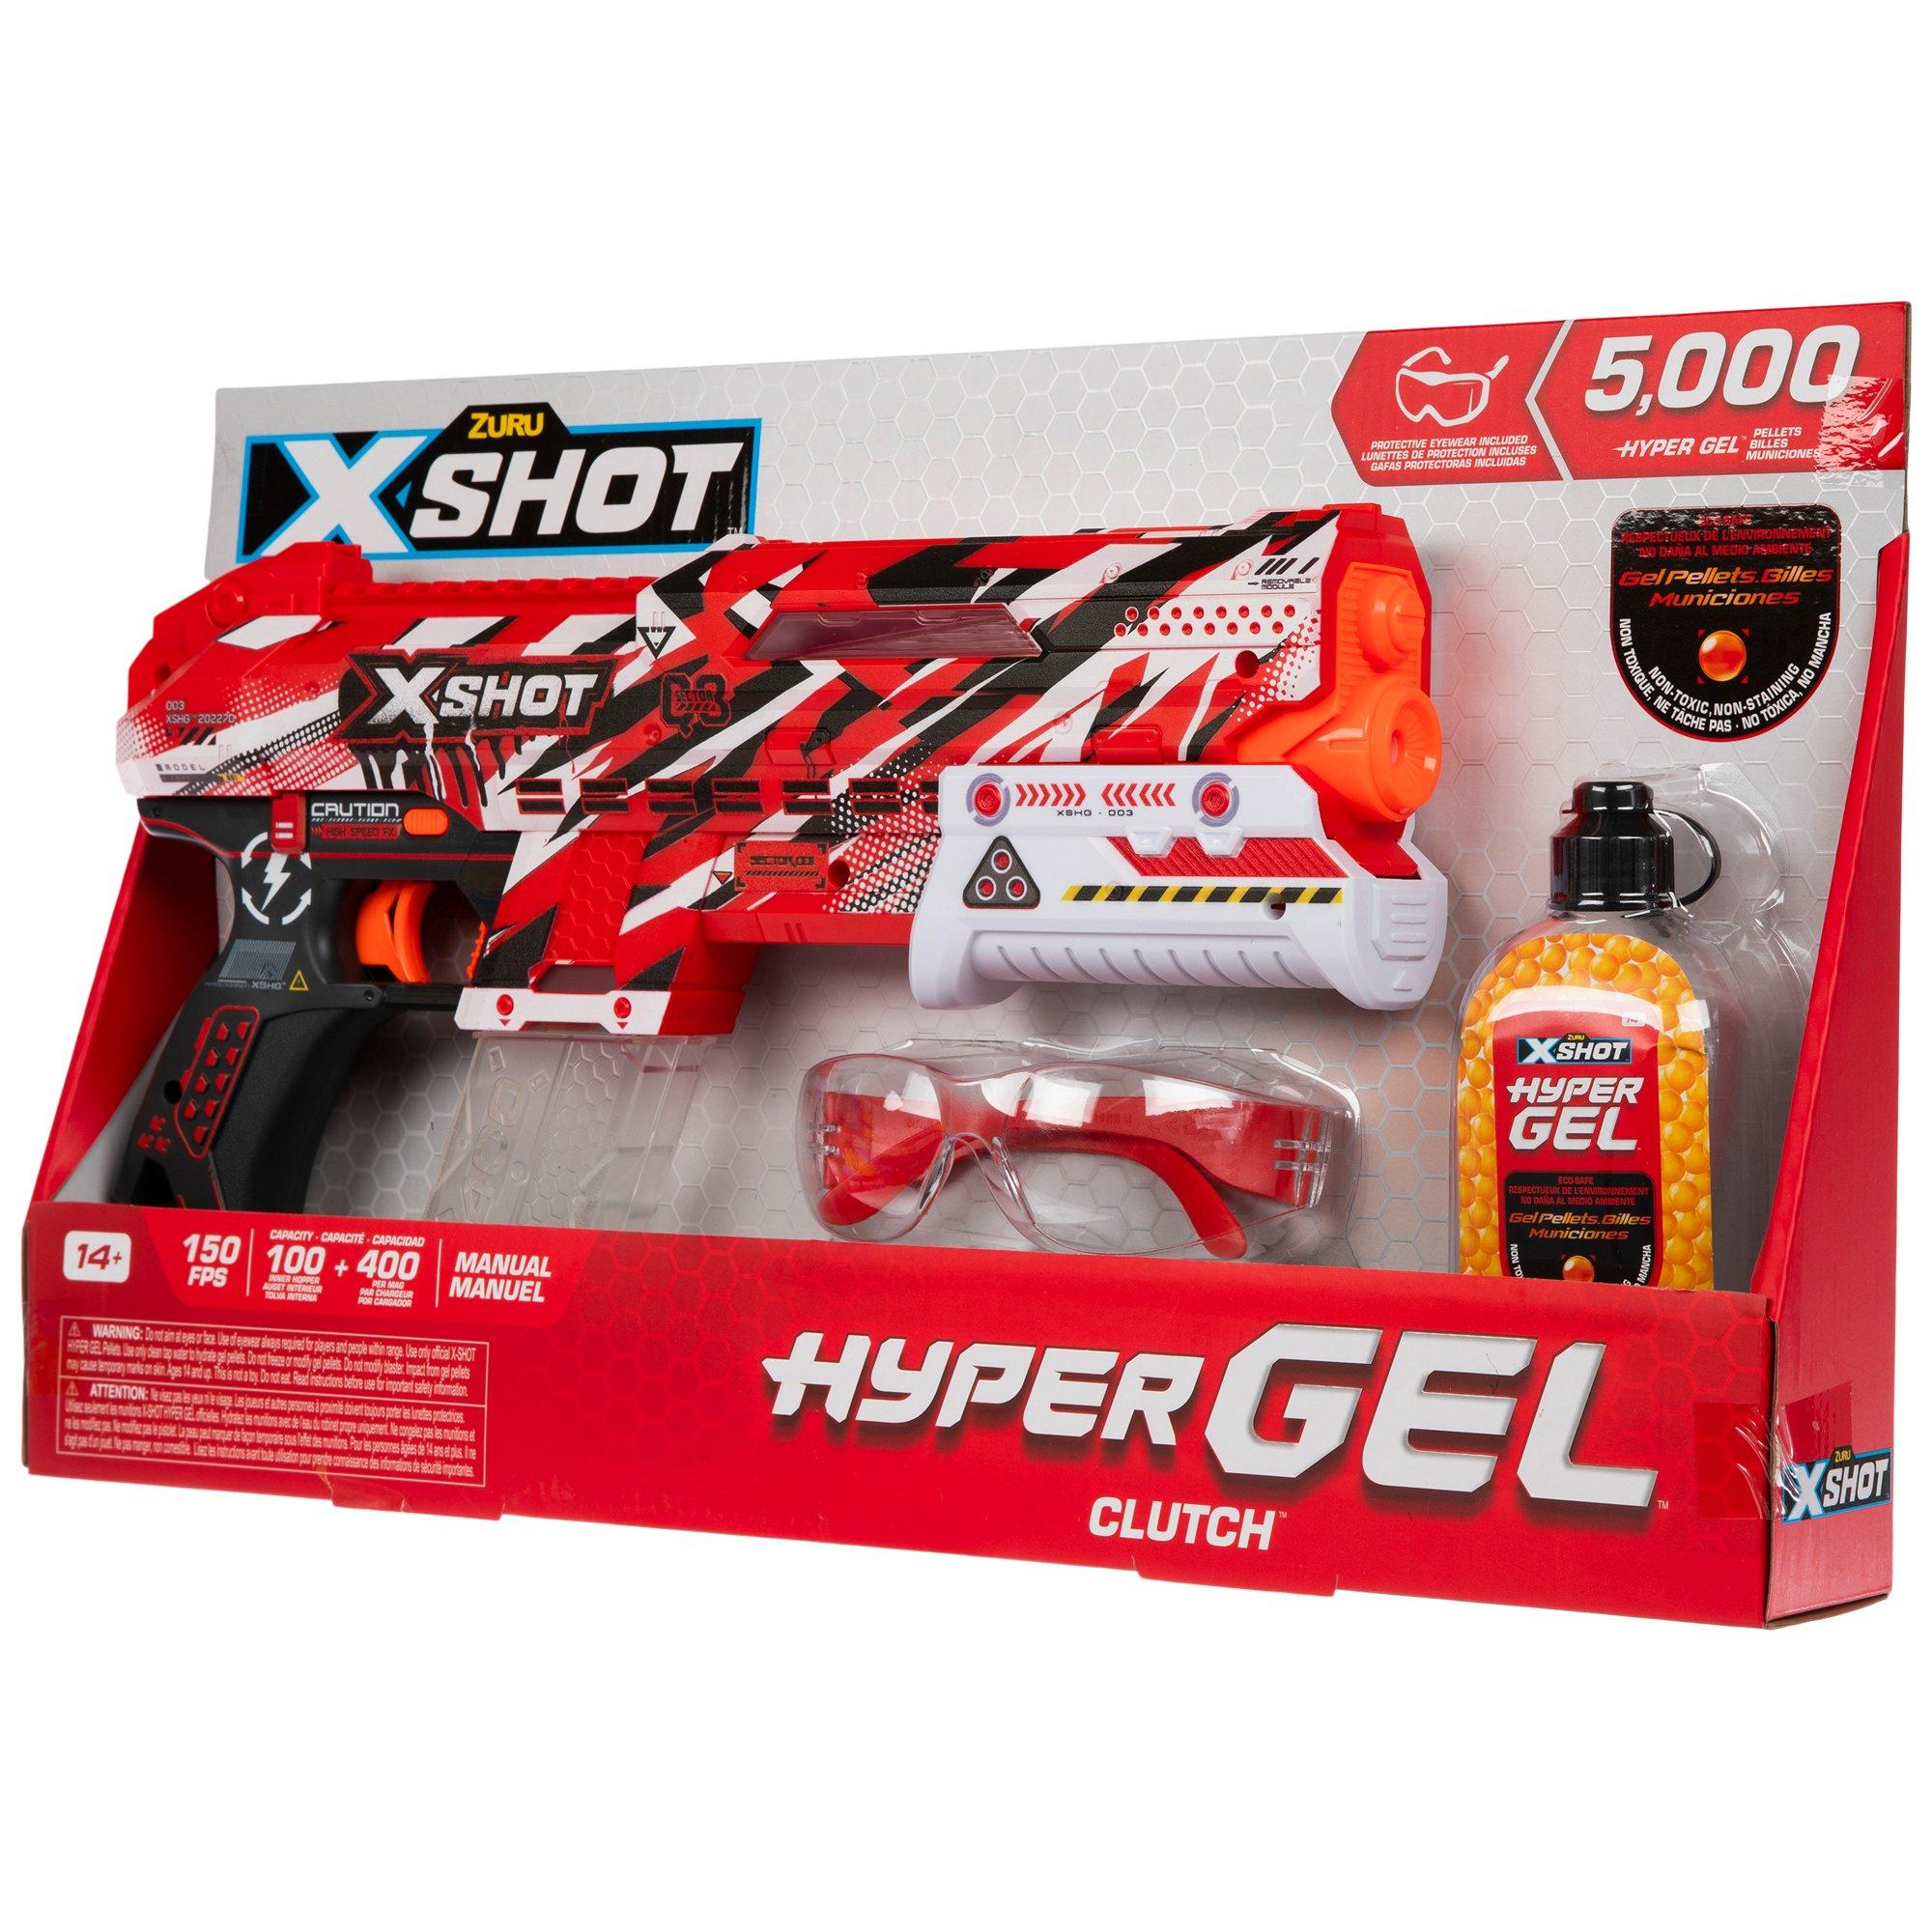 XShot X-SHOT toy gun Hyper Gel, series 1, 5000 gel balls, assorted, 36622  buy in the online store at Best Price